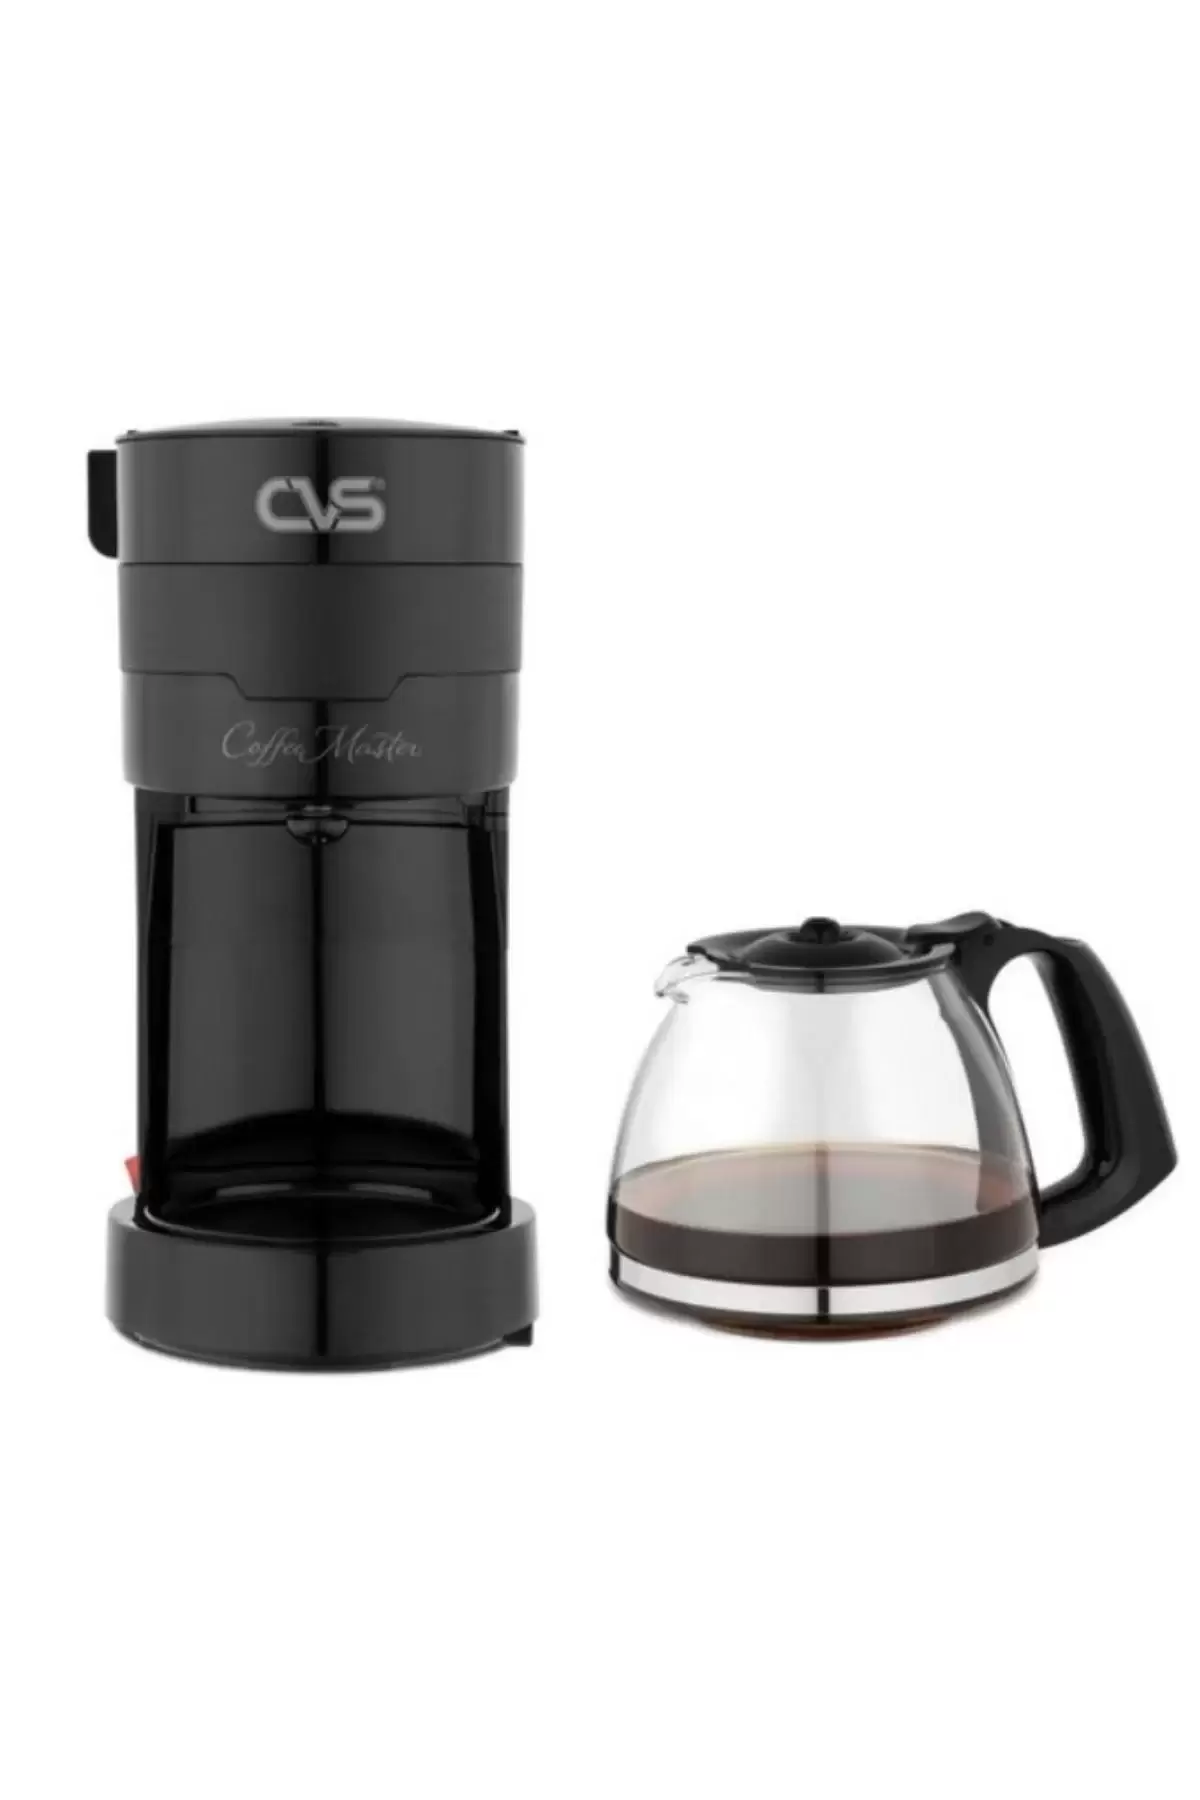 Cvs DN19813 Coffe Master Filtre Kahve Makinası 1250 Cc